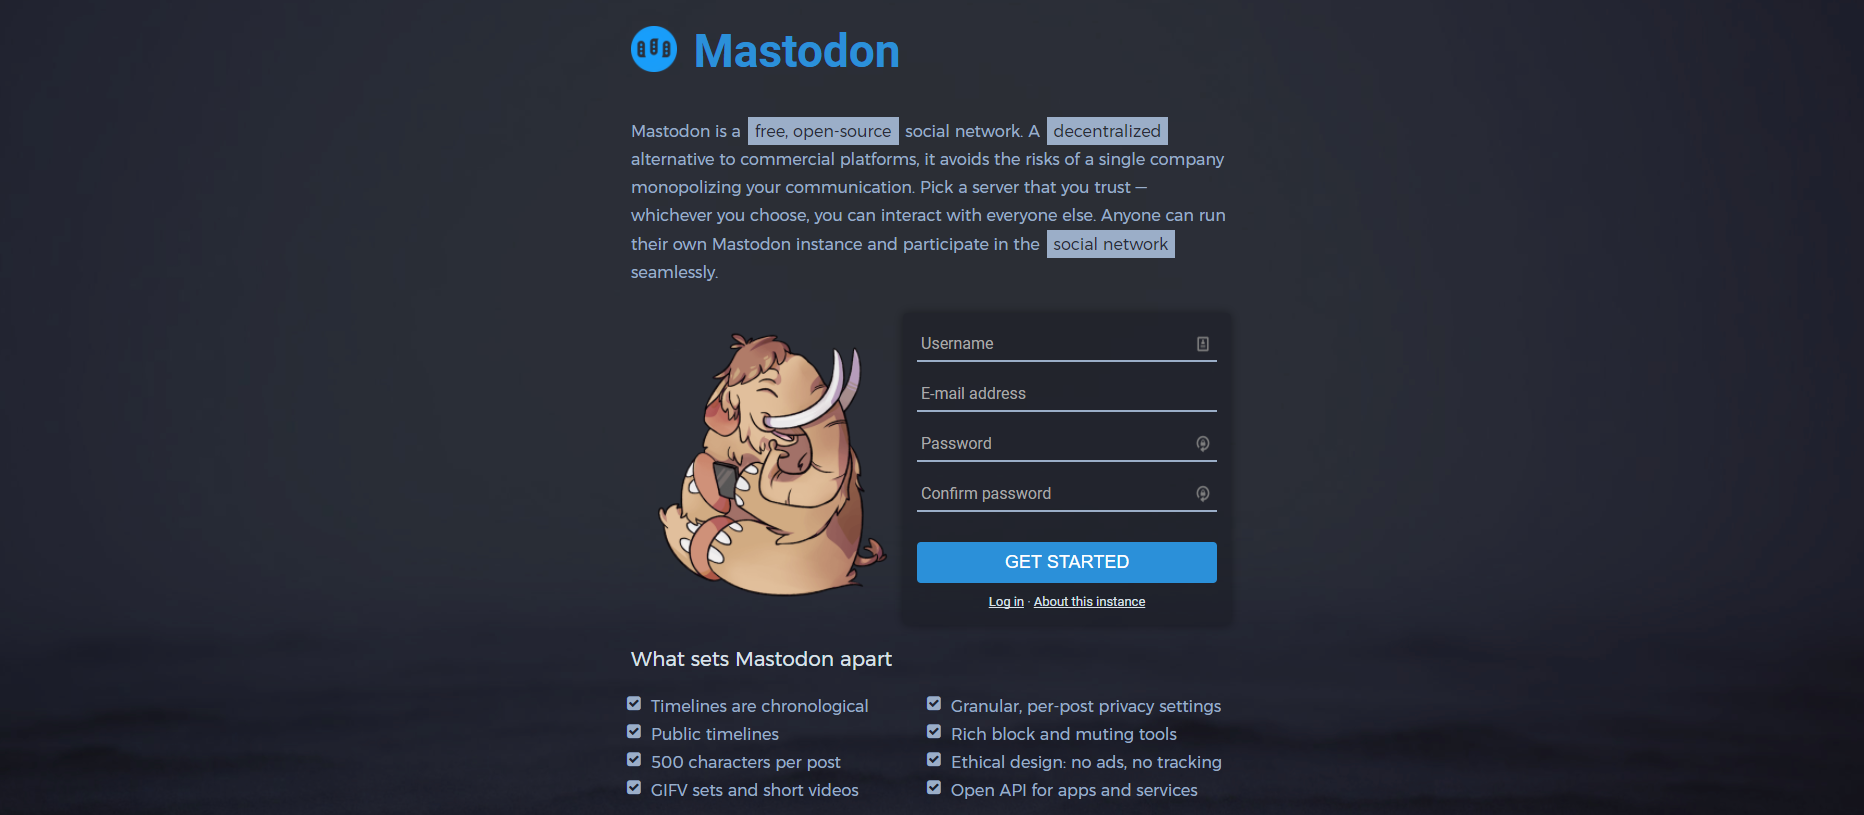 How to install a Mastodon instance on Ubuntu 16.04 LTS